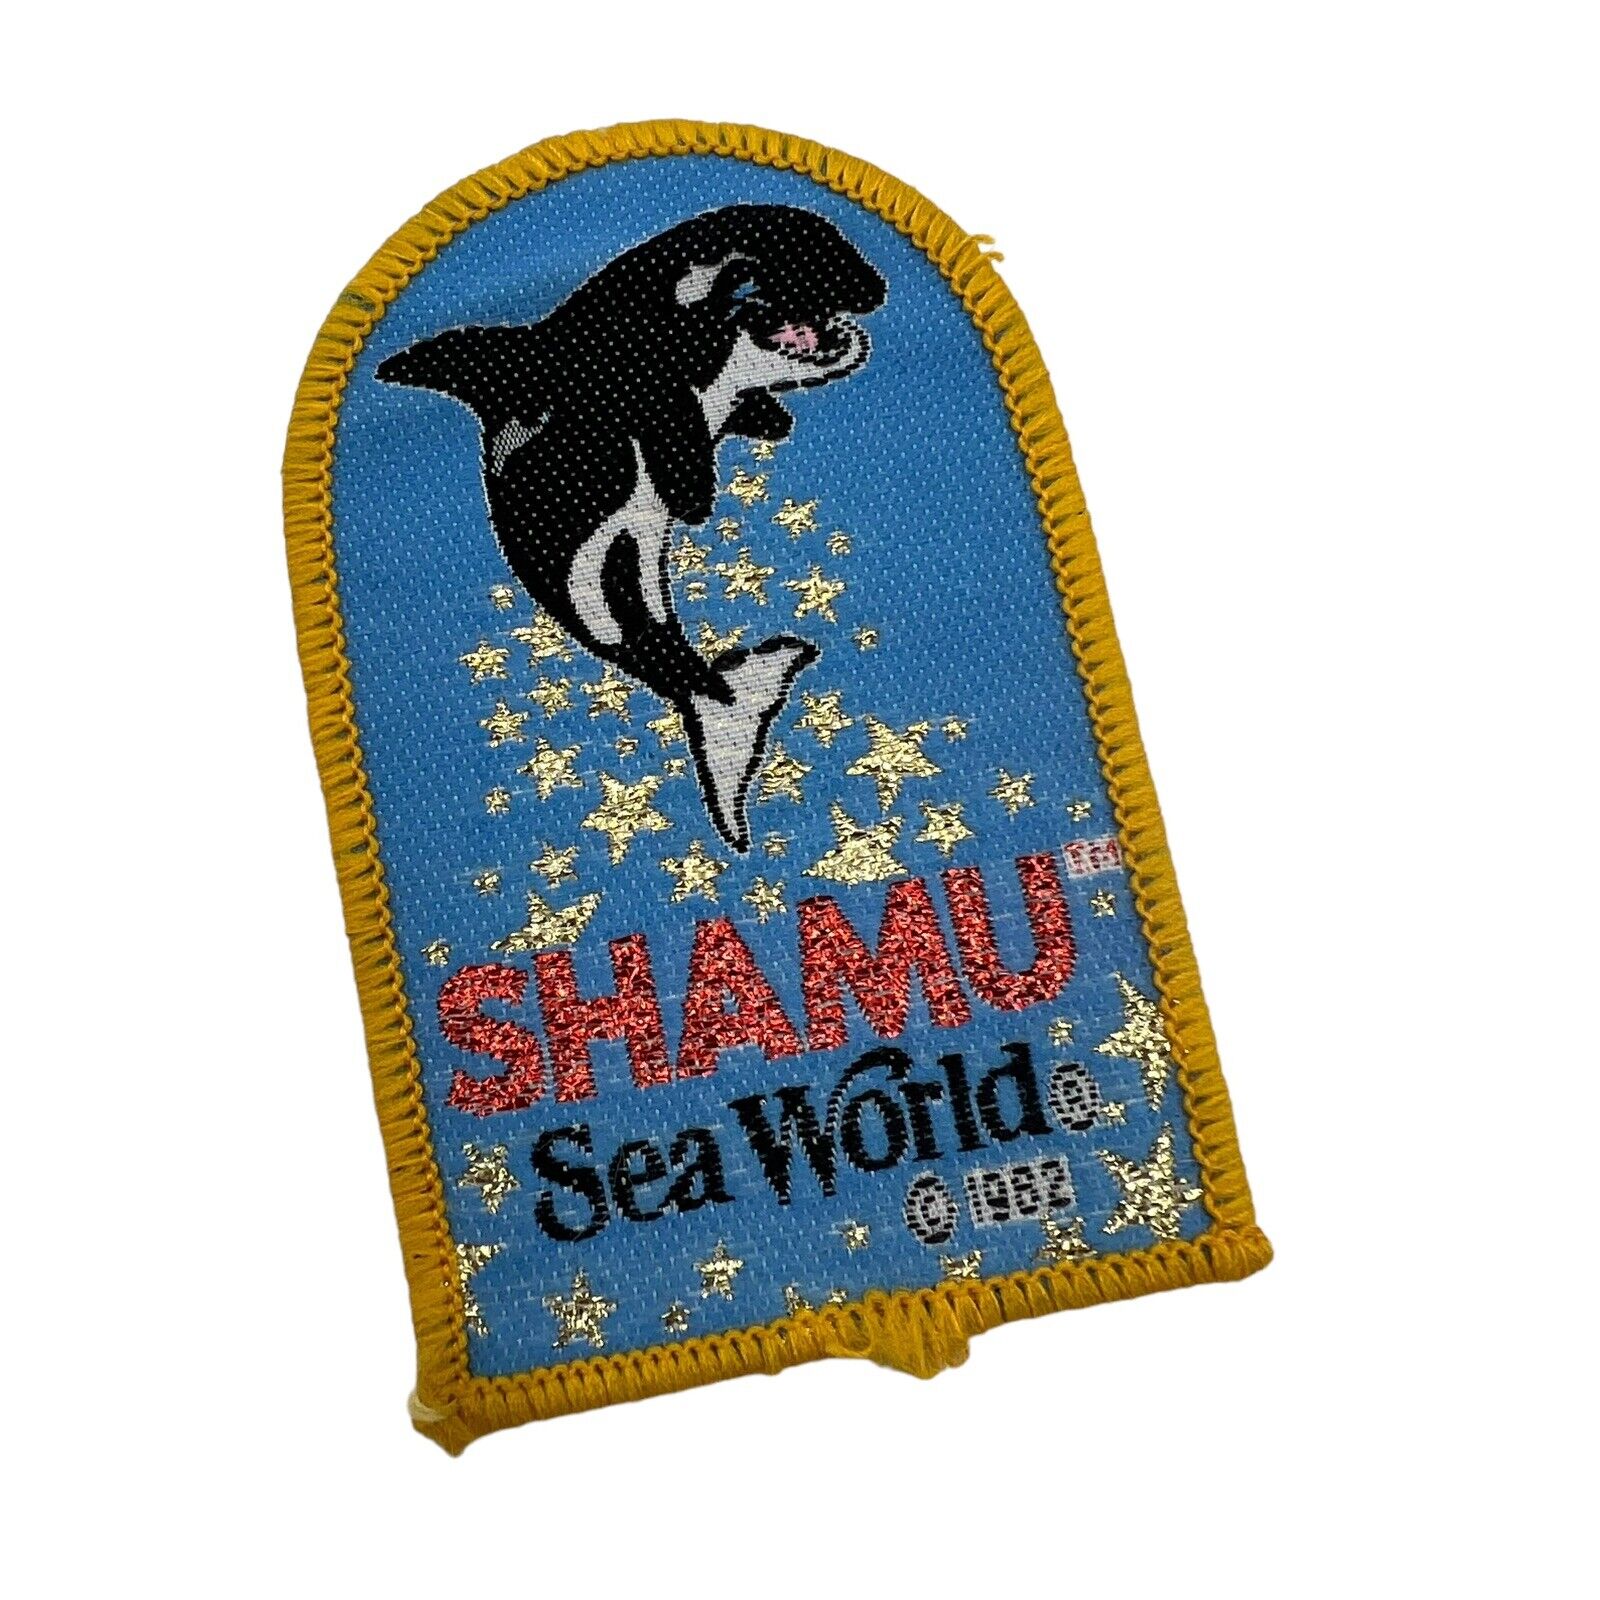 Vintage 1982 Sea World SHAMU Orca Killer Whale Marine Park Souvenir Patch Badge